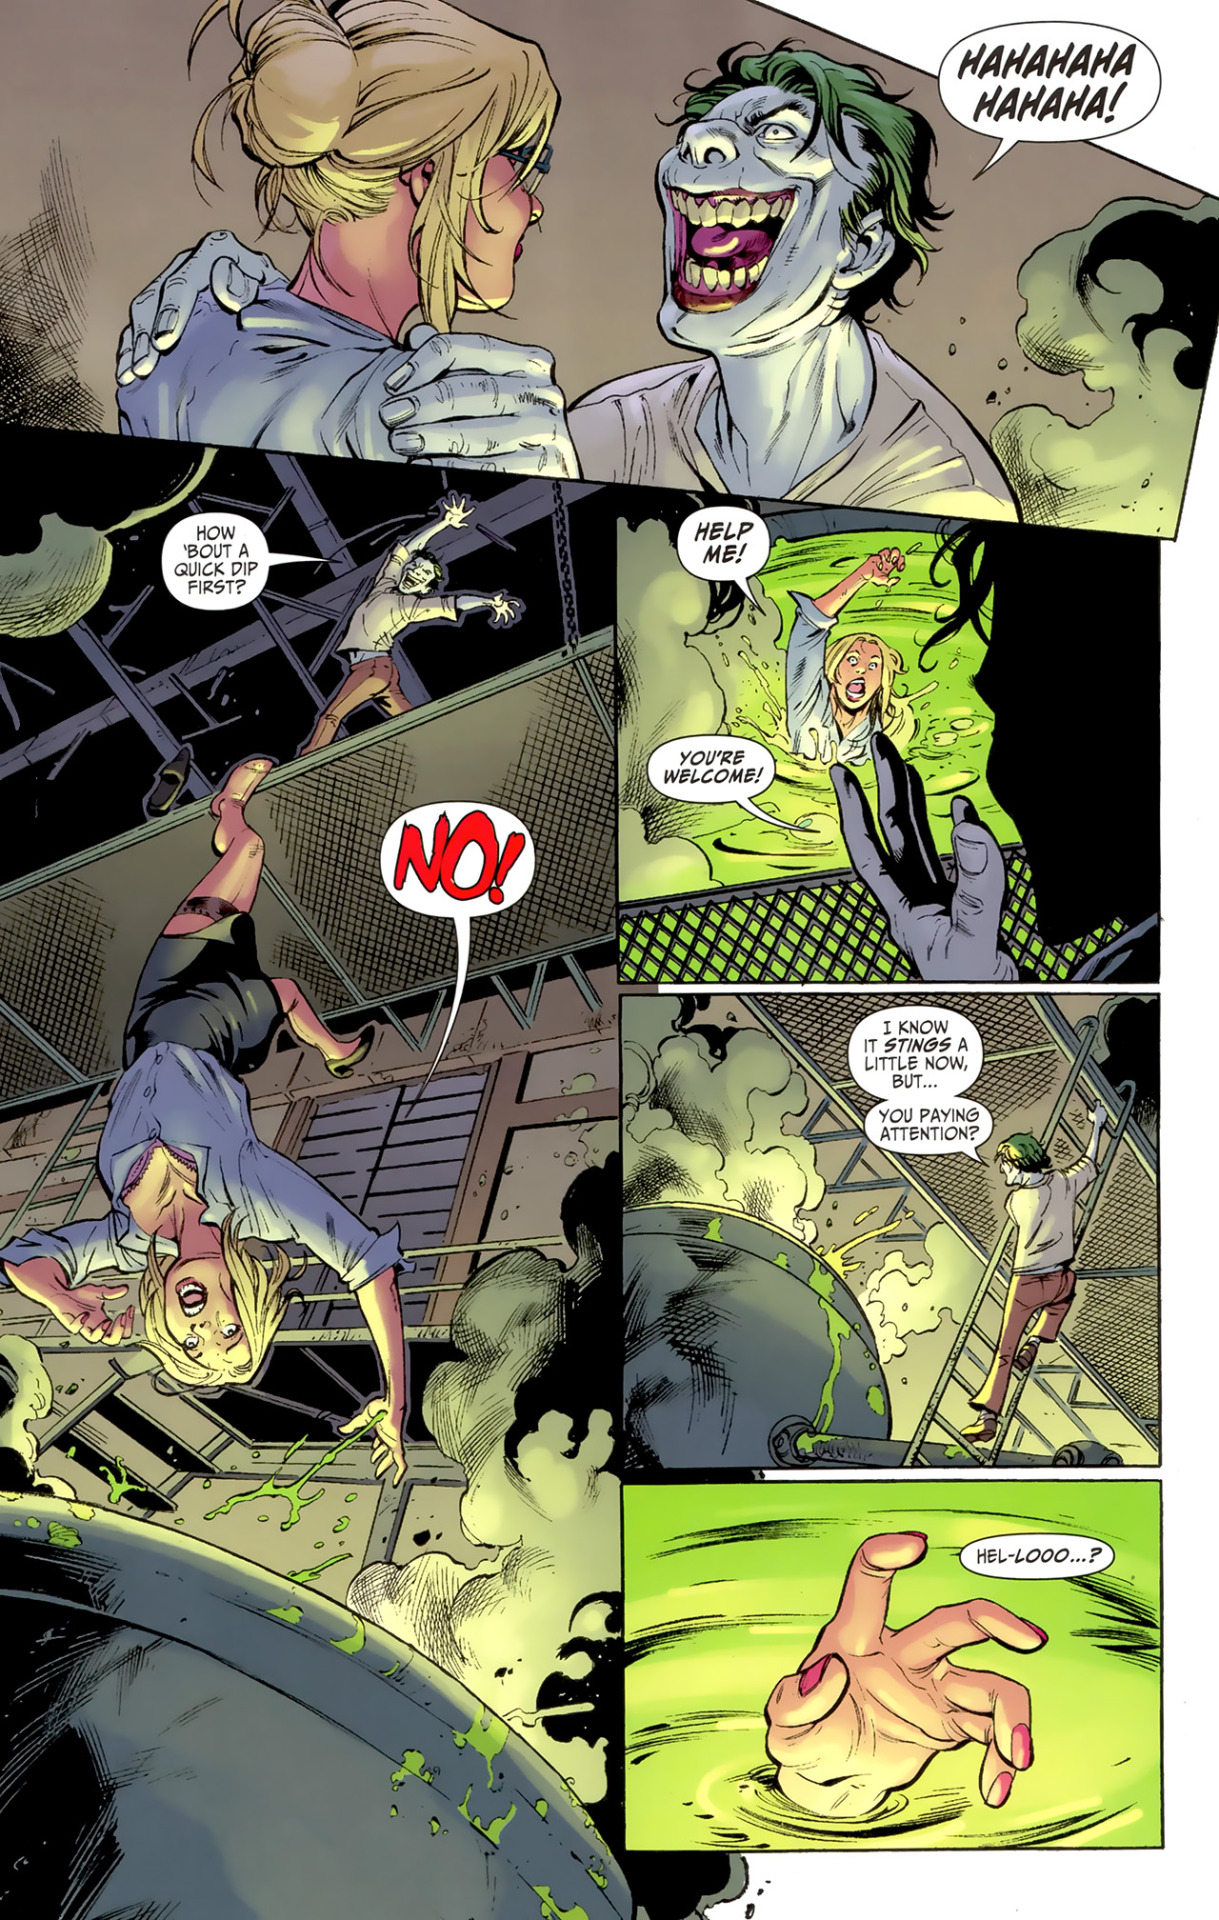 Gotham City Fan Harley Quinns Origin In N52